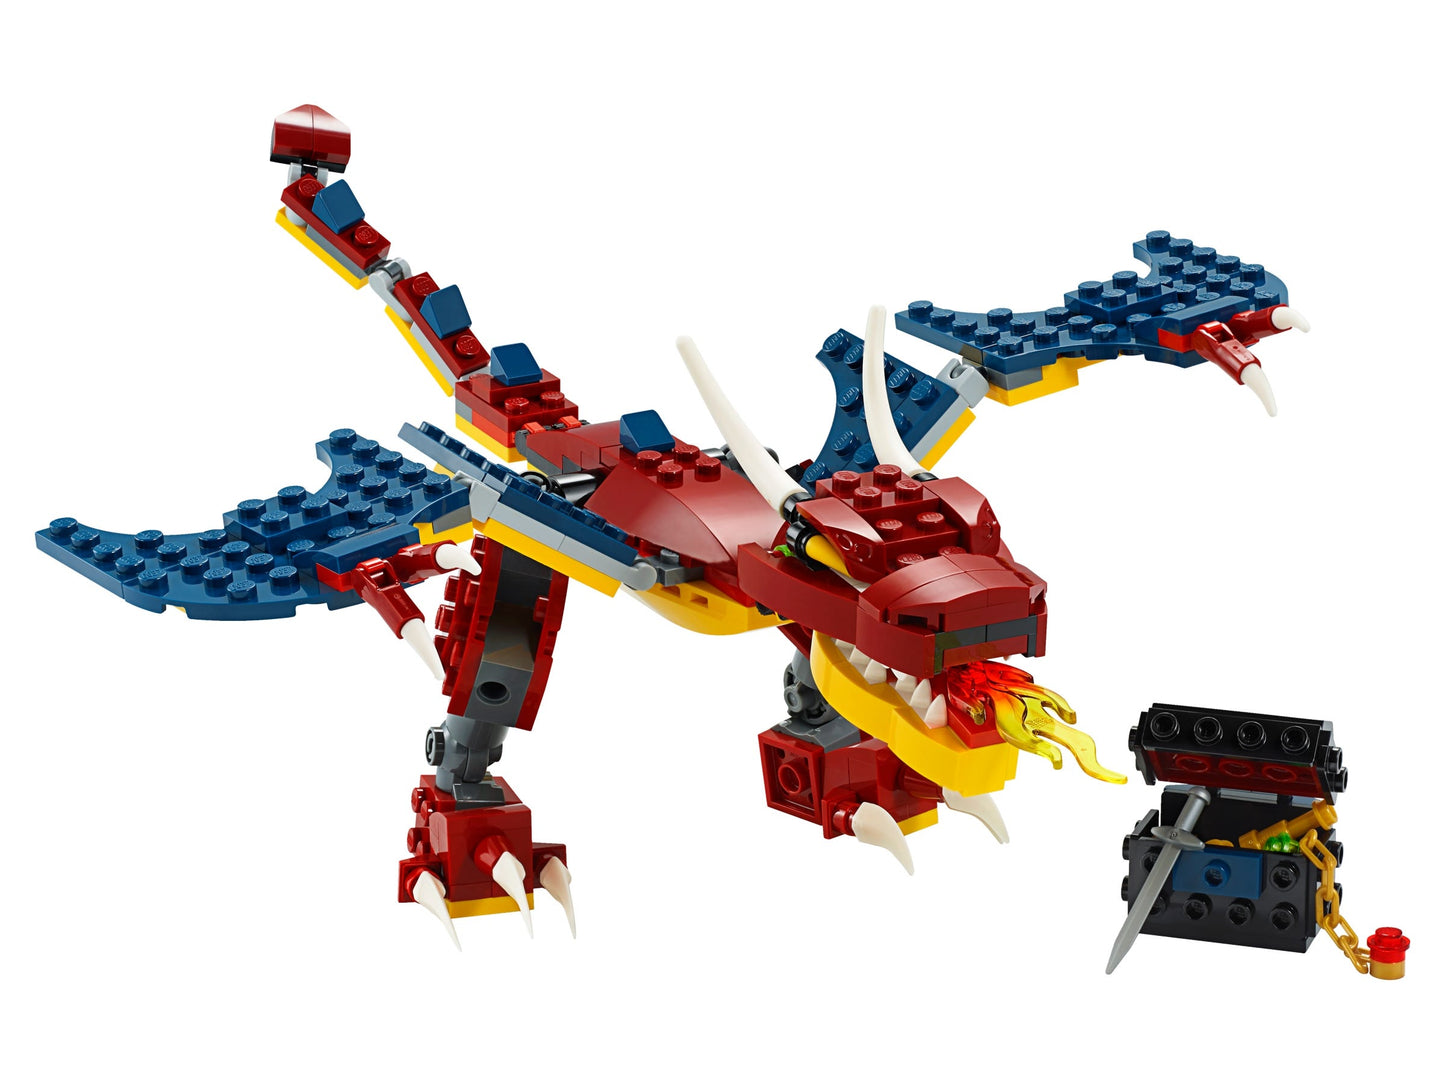 LEGO Creator Fire Dragon 31102